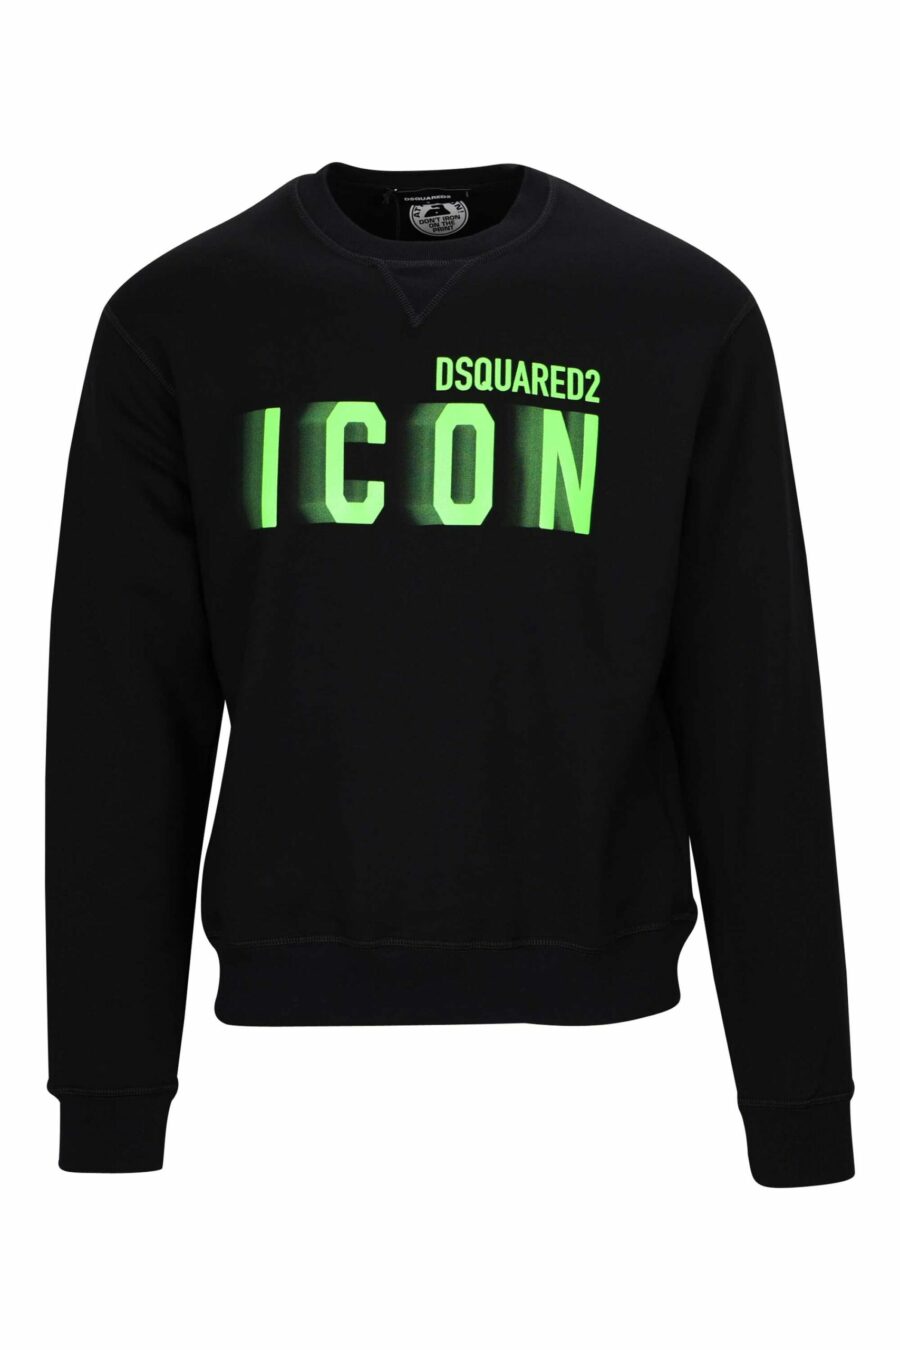 Black sweatshirt with neon green blurred "icon" maxilogo - 8054148360863 scaled